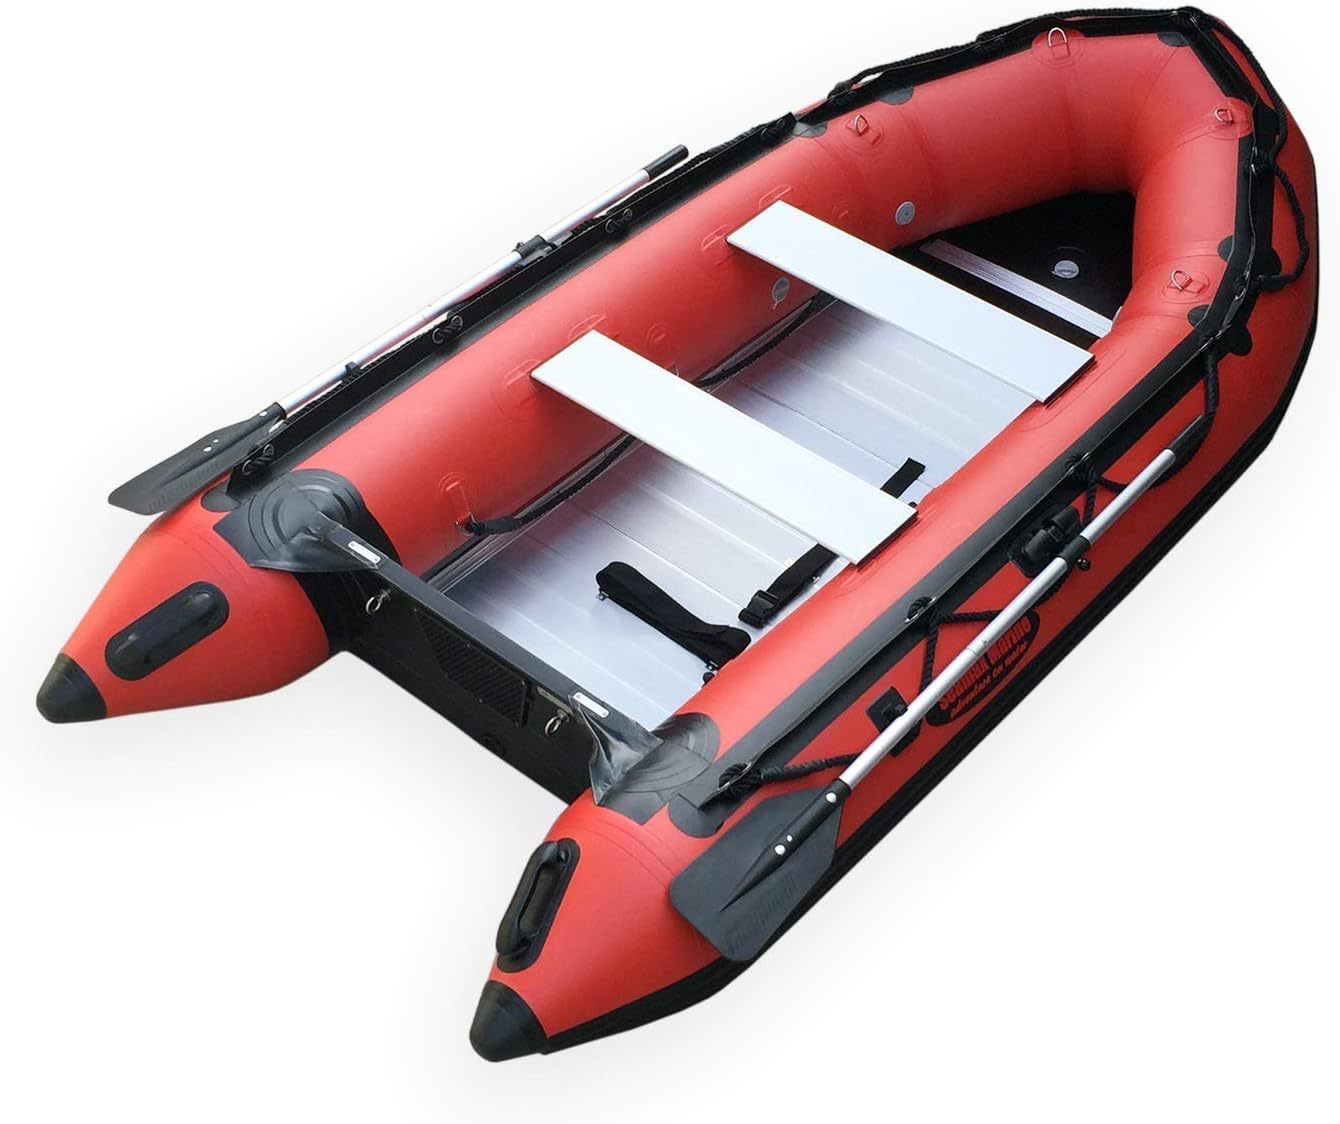 Seamax Ocean320 10.5 Feet Heavy Duty Inflatable Boat